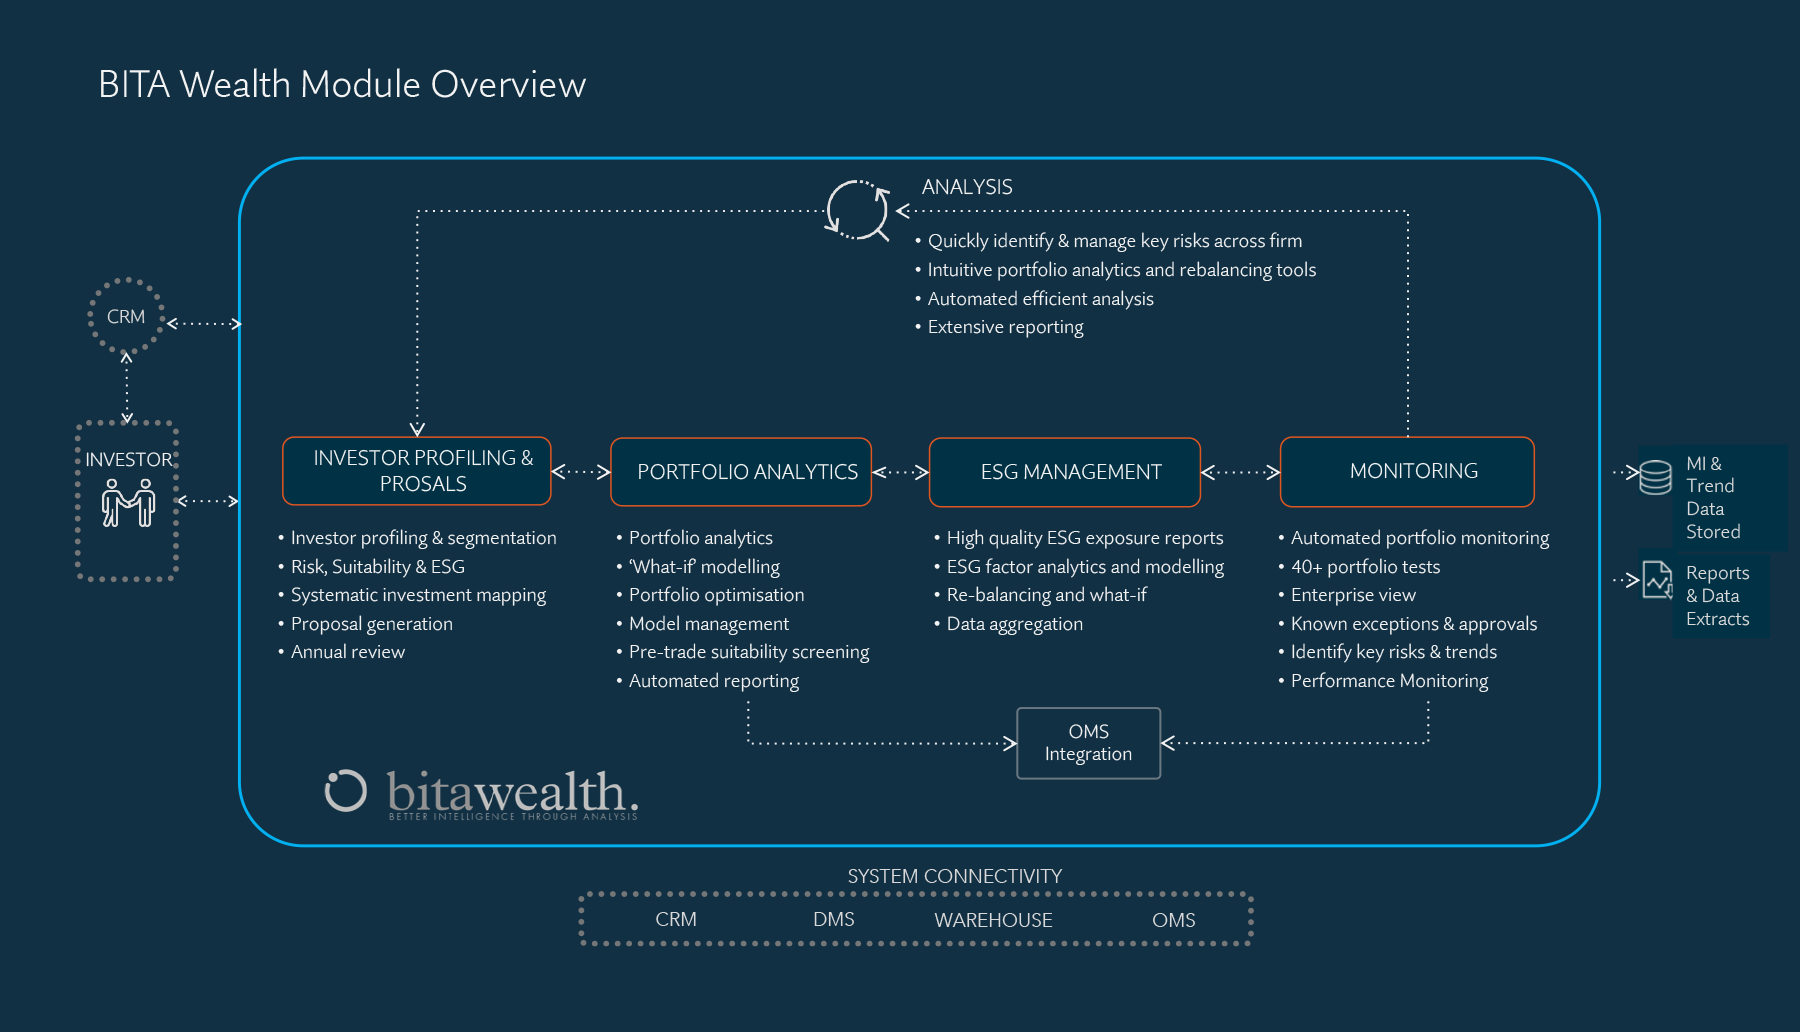 BITA Wealth Modules - Overview